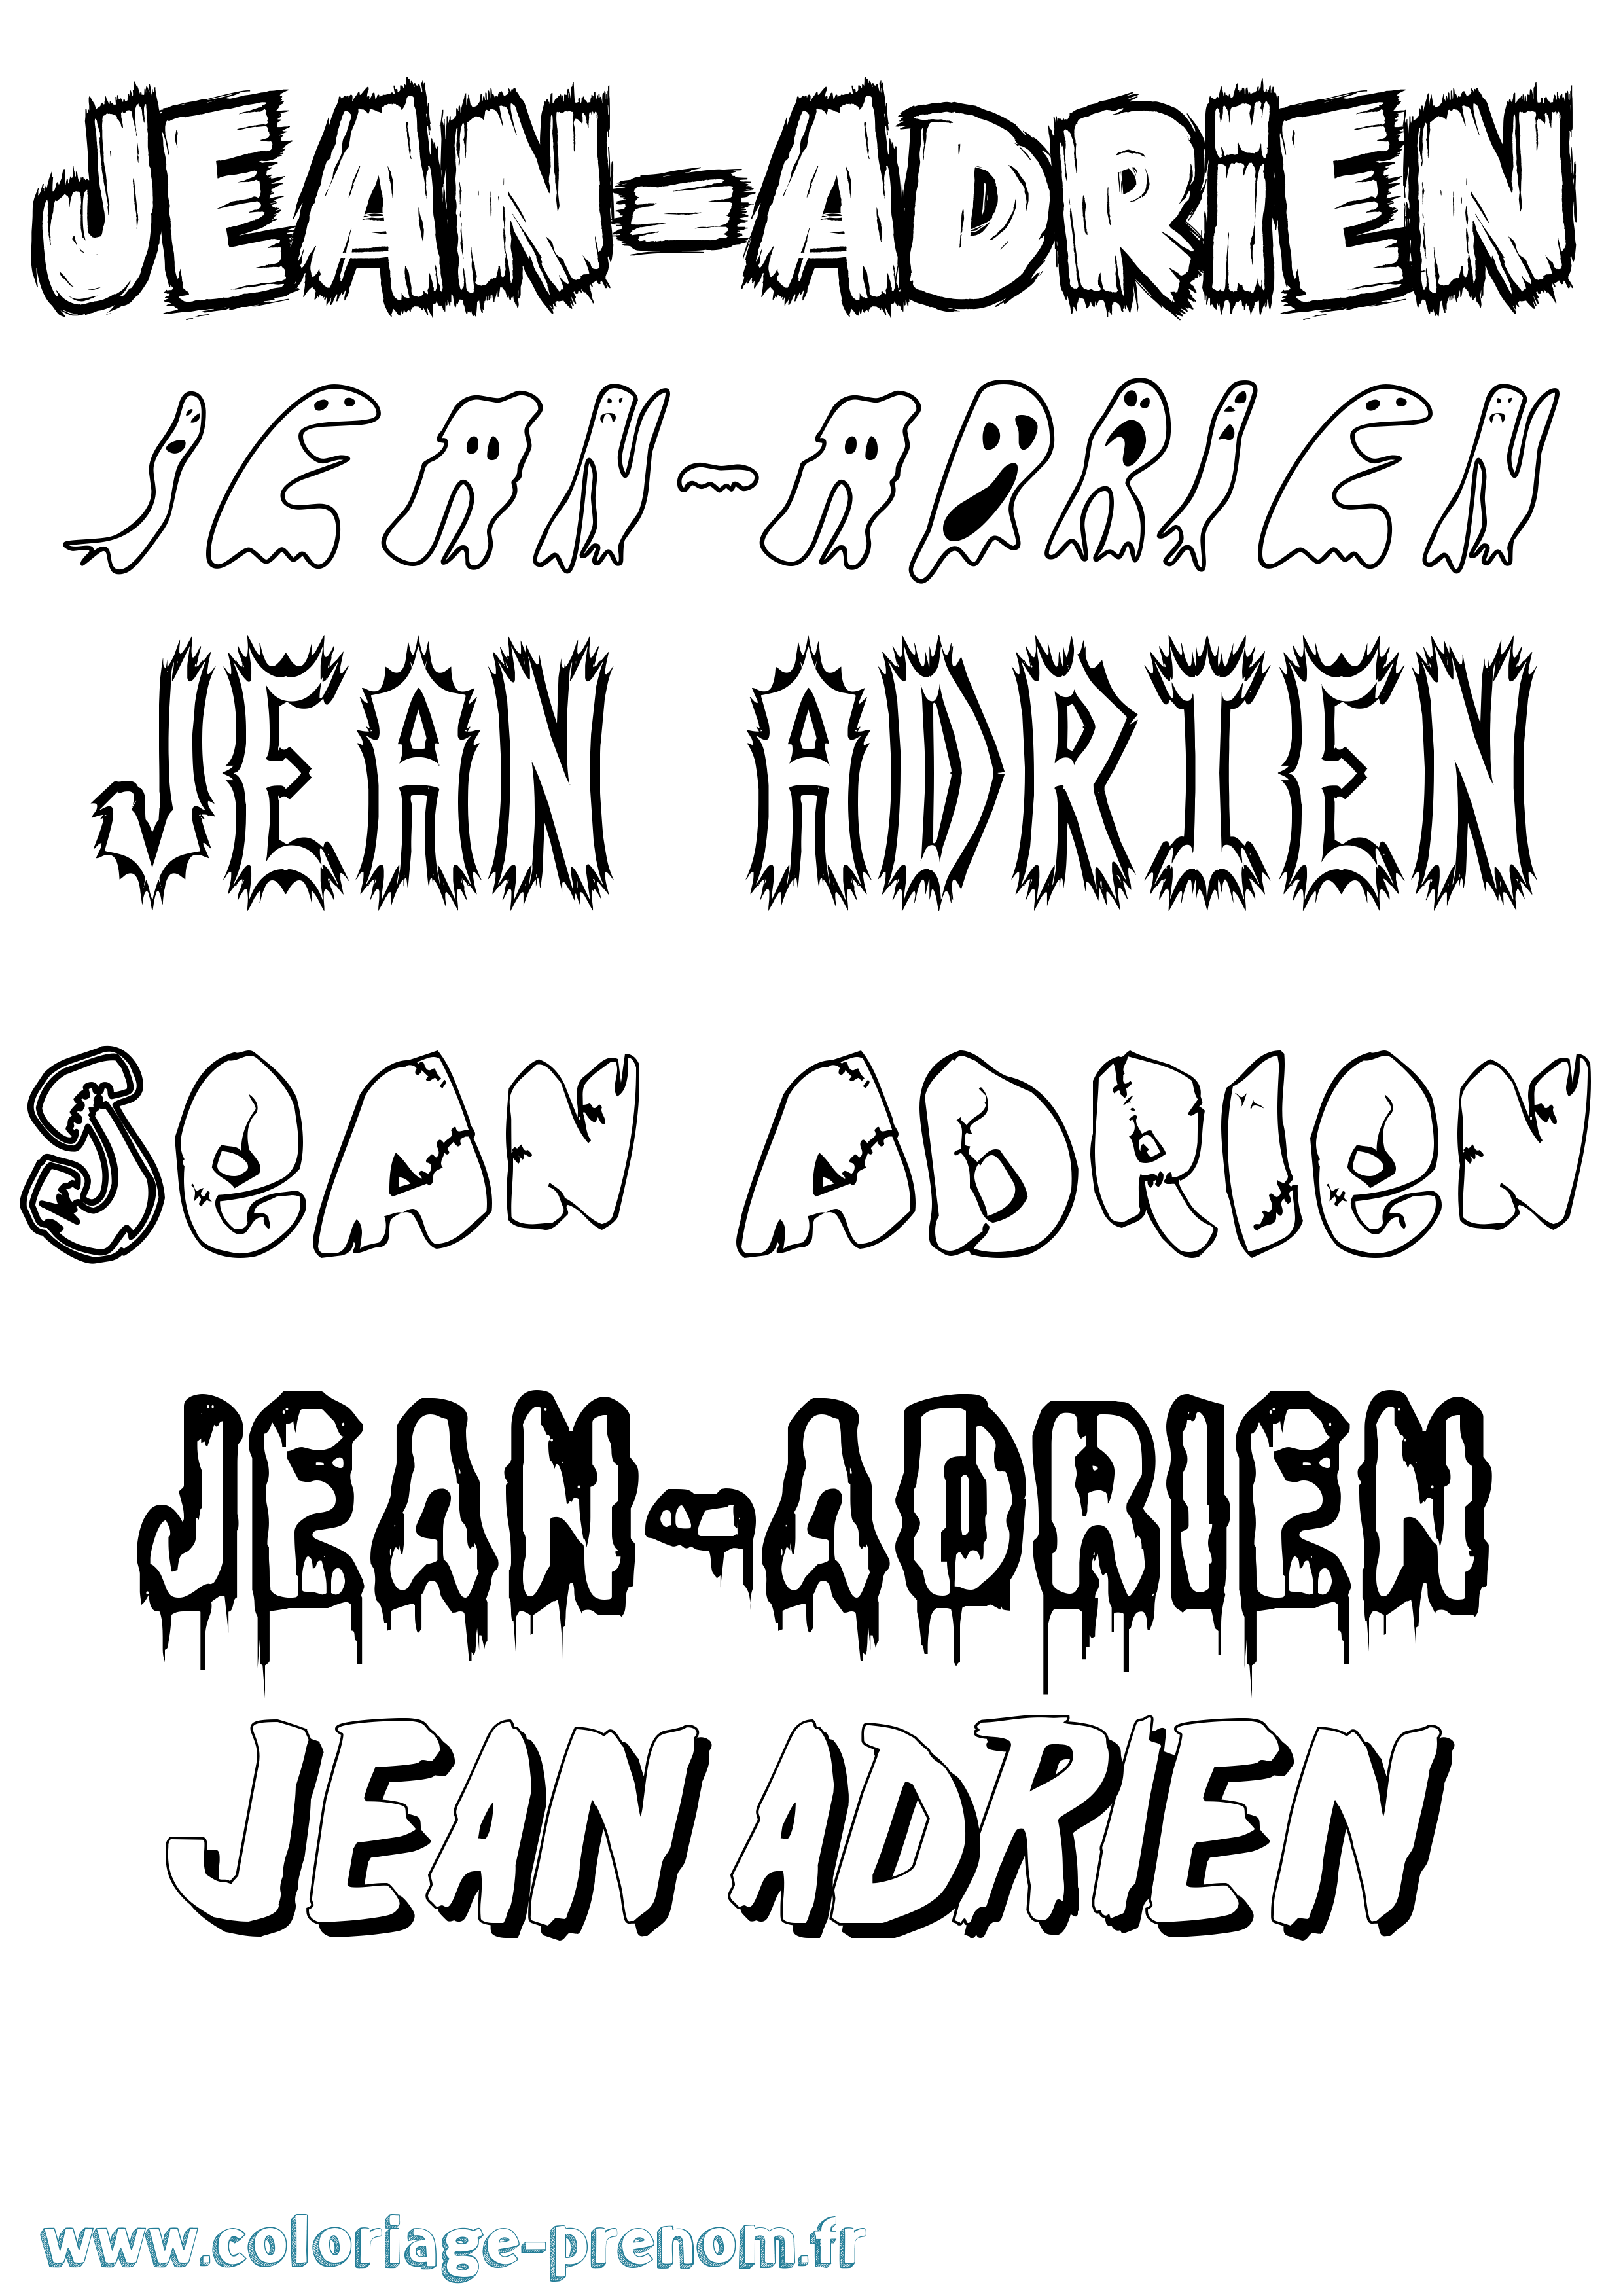 Coloriage prénom Jean-Adrien Frisson